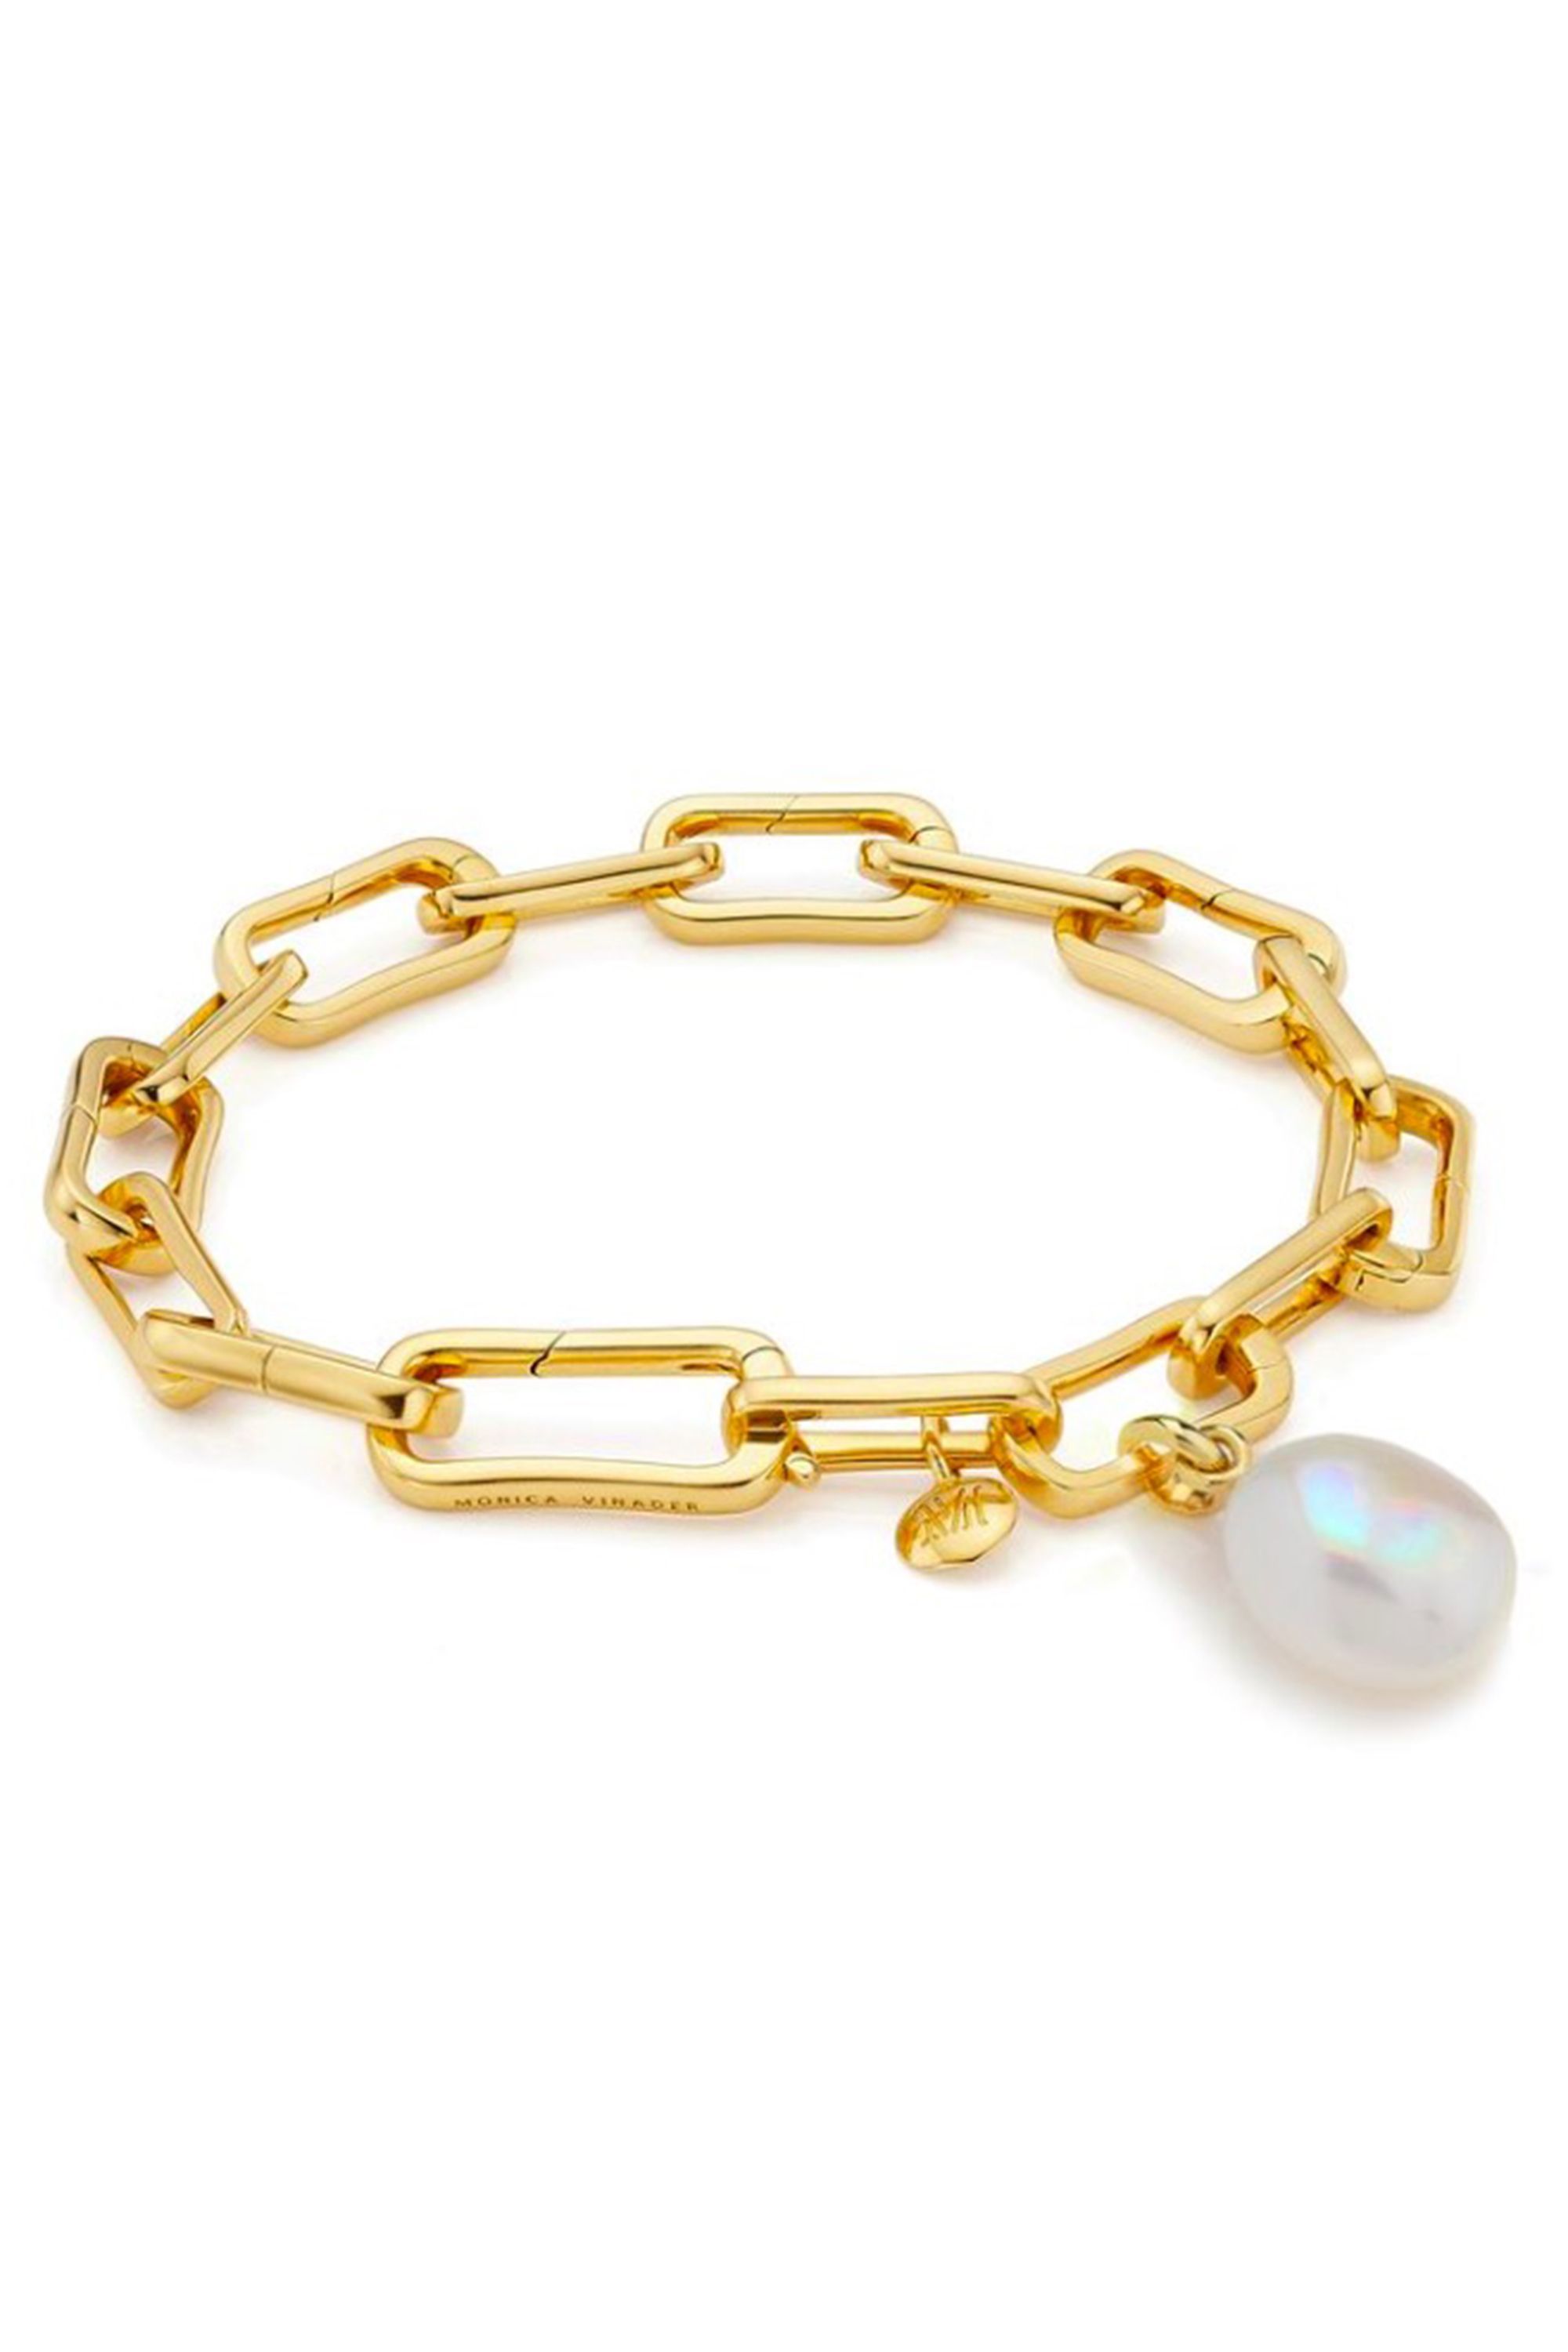 Rabbit Bracelet 16th Century Design, Attached Gold Bonded & Sterling Silver  Chain - SilverLinensJewelry